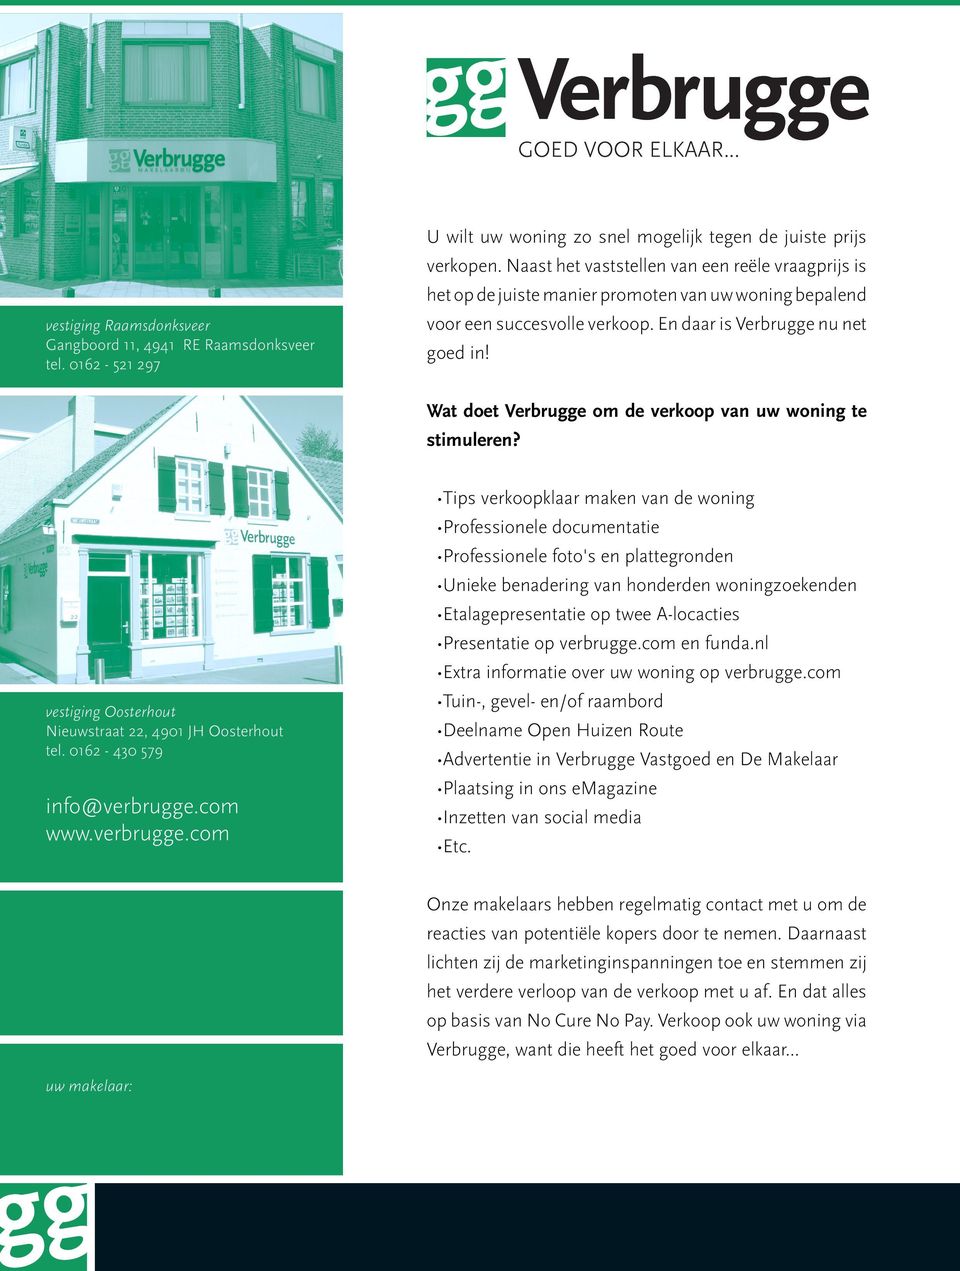 Wat doet Verbrugge om de verkoop van uw woning te stimuleren? vestiging Oosterhout Nieuwstraat 22, 4901 JH Oosterhout tel. 0162-430 579 info@verbrugge.